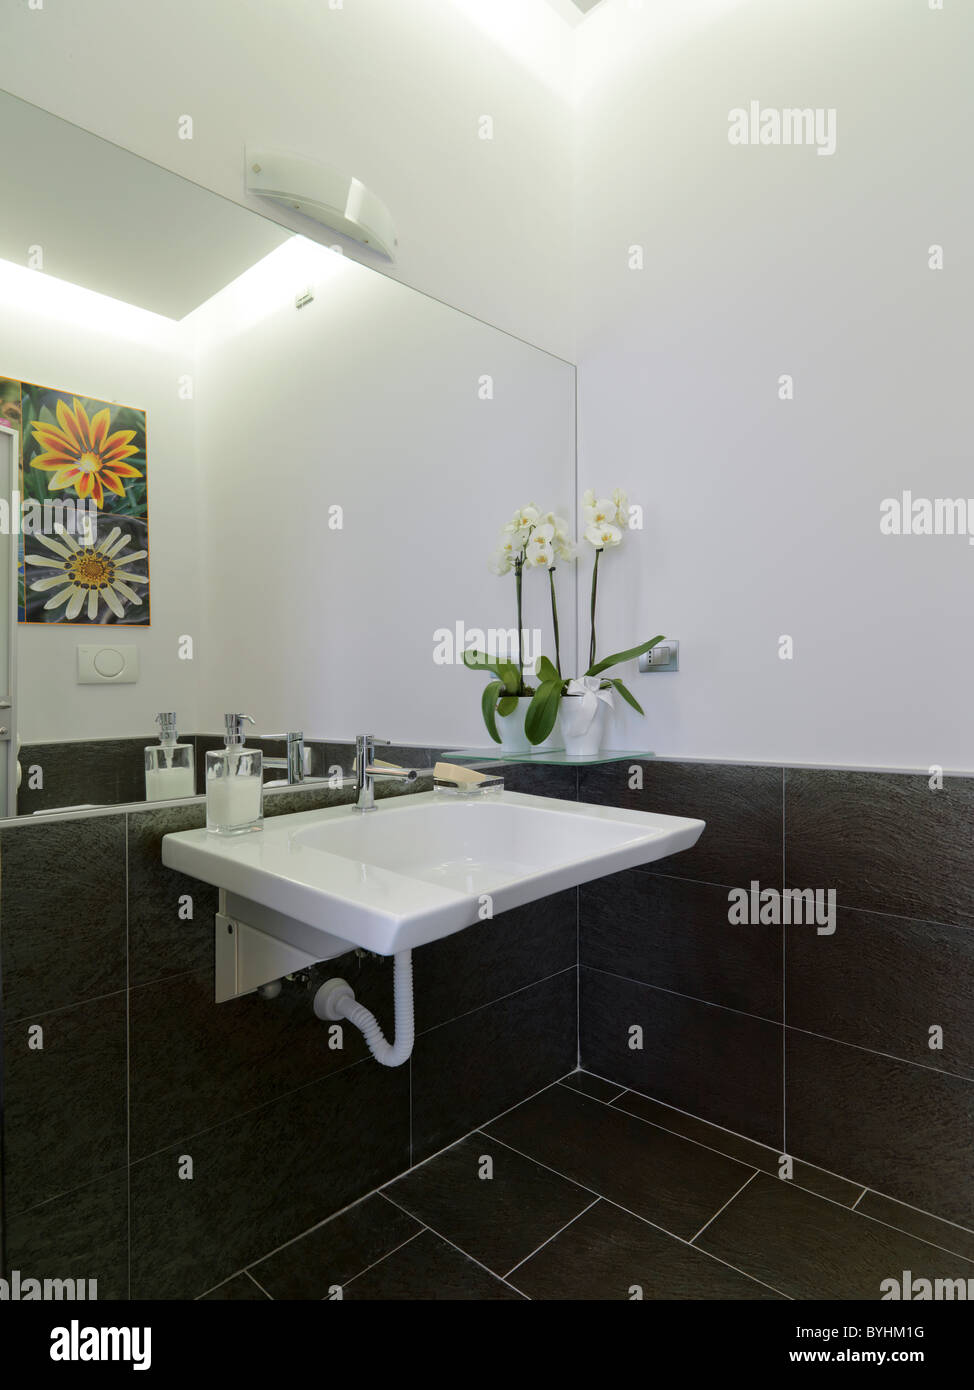 white ceramic washbasin in modern bathroom Stock Photo